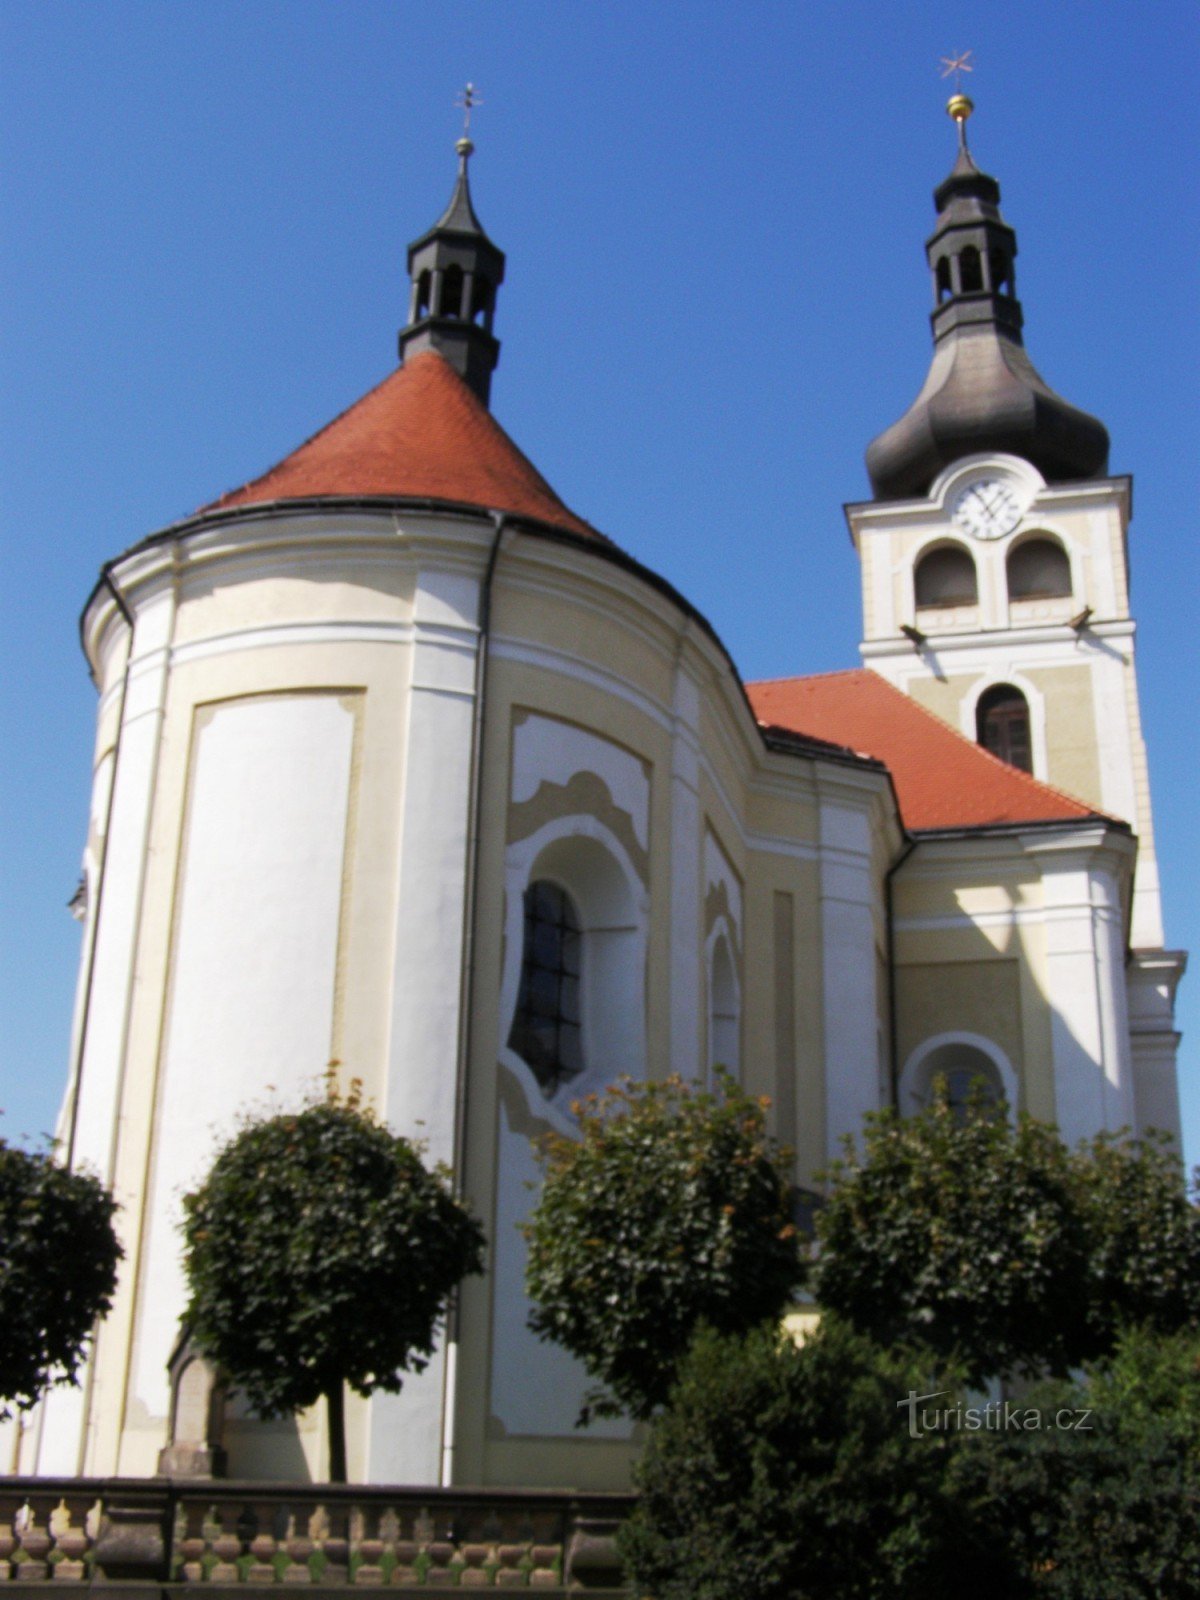 Hořice - chiesa